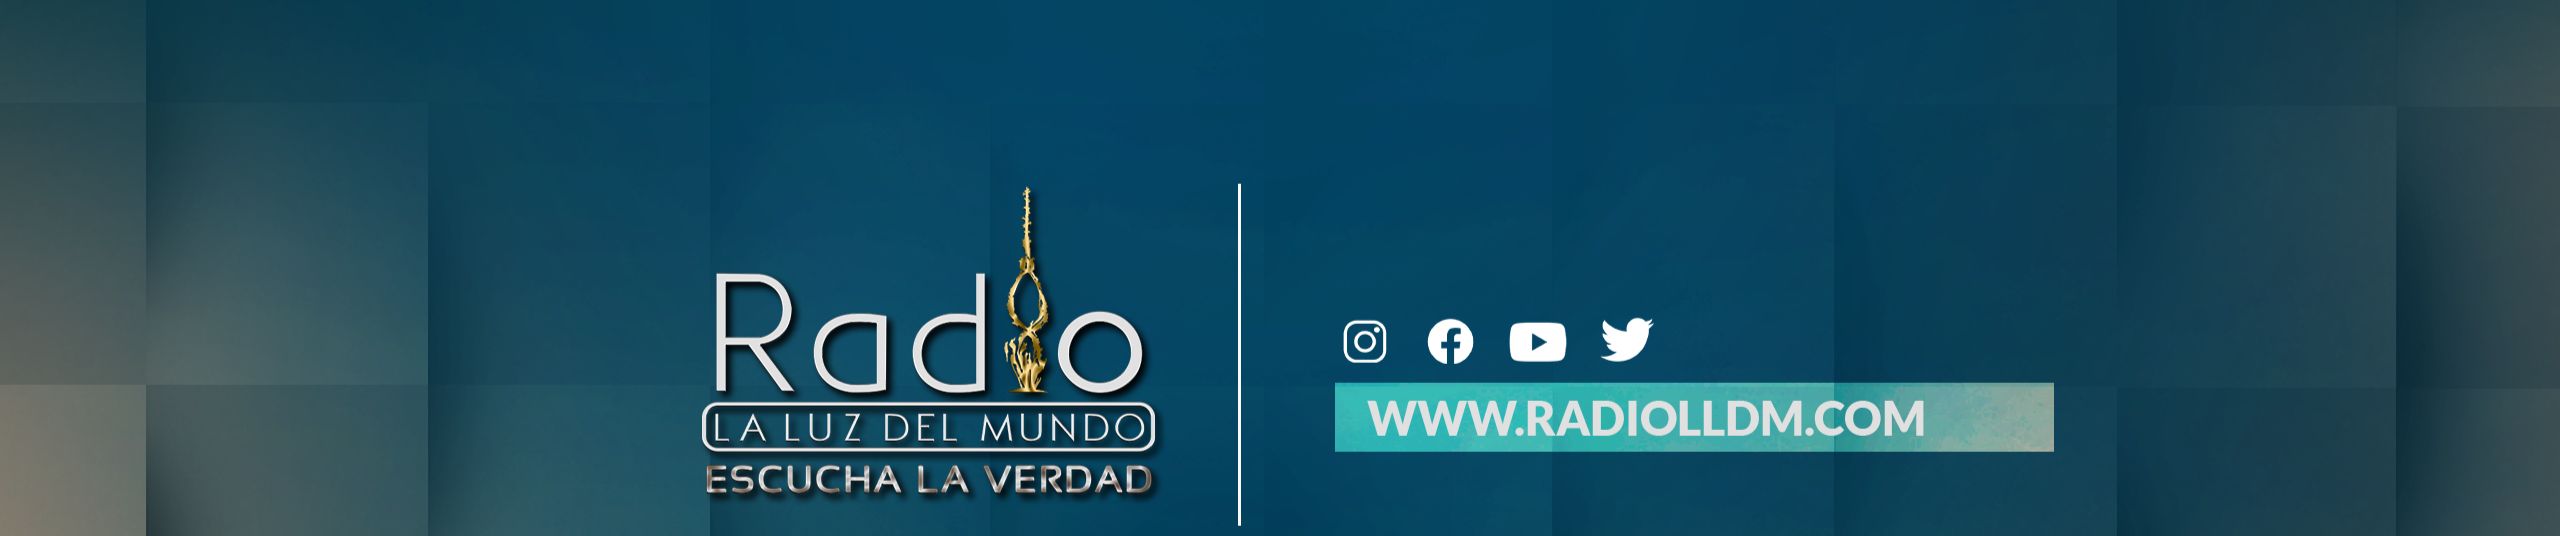 Stream Radio La Luz del Mundo music | Listen to songs, albums, playlists  for free on SoundCloud